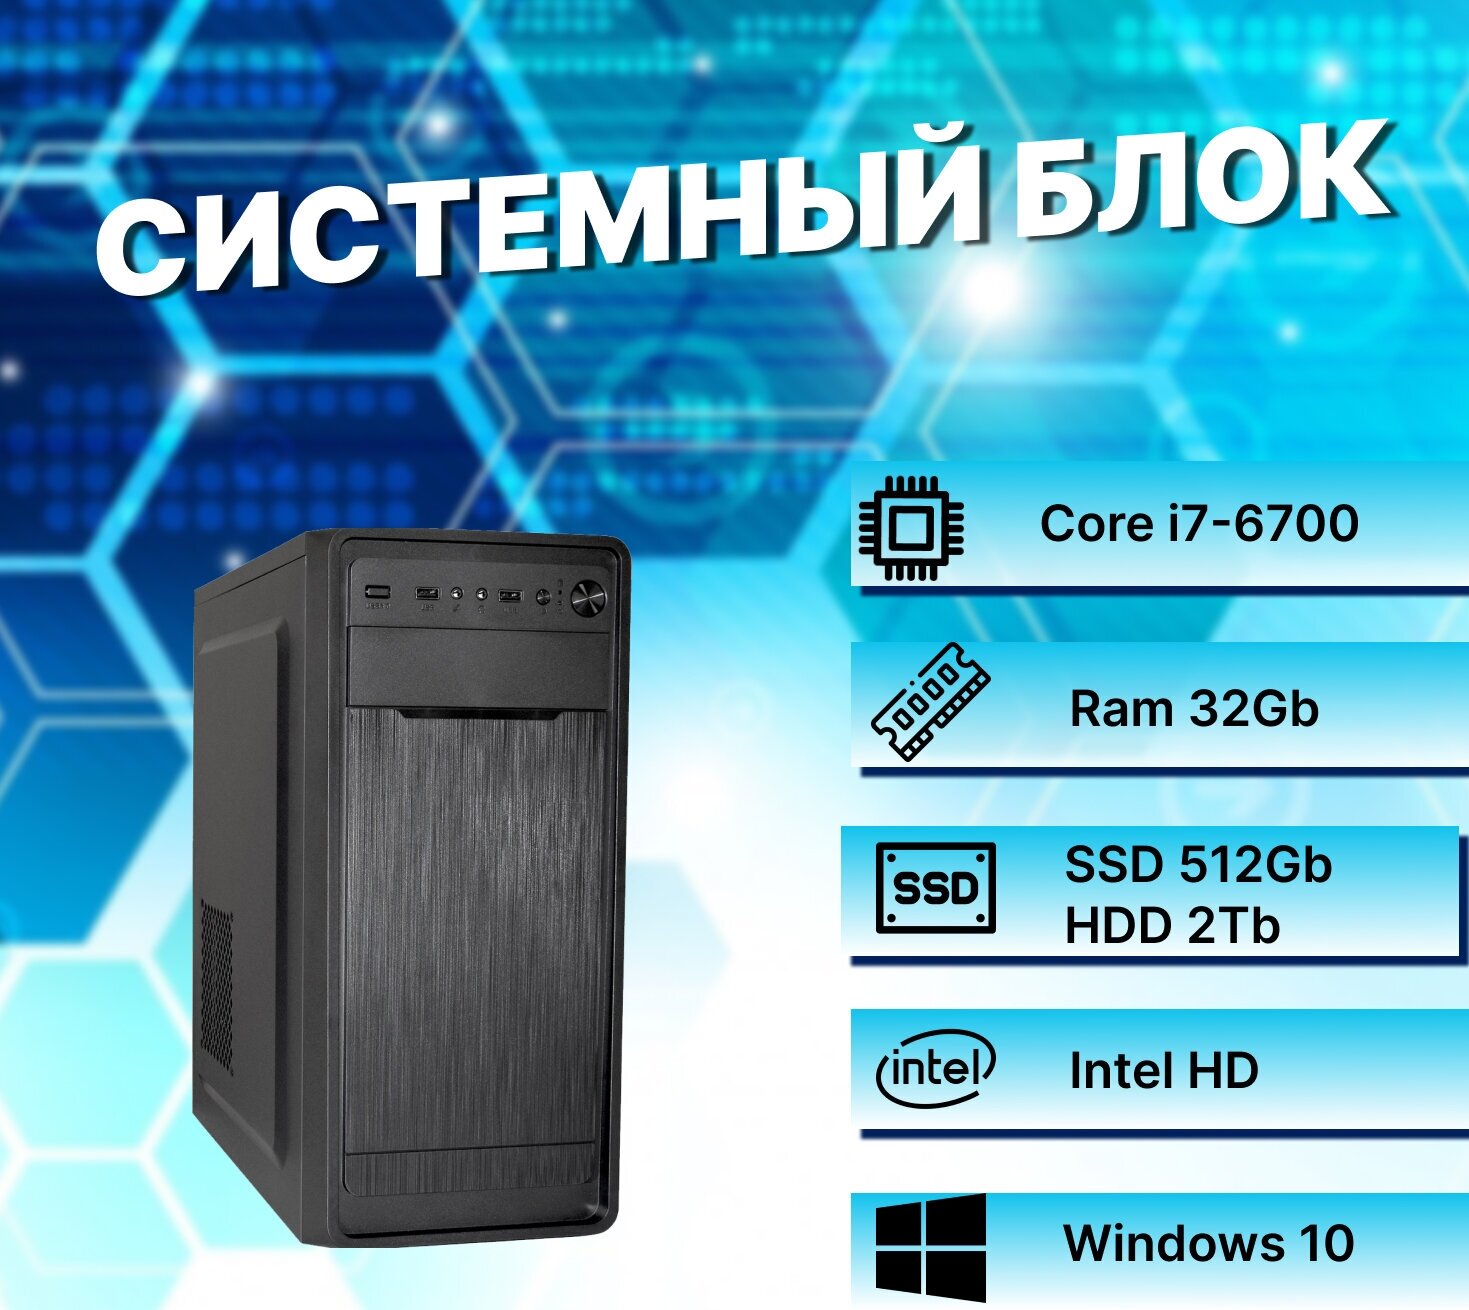 Системный блок Intel Core I7-6700 (3.4ГГц)/ RAM 32Gb/ SSD 512Gb/ HDD 2Tb/ Intel HD/ Windows 10 Pro